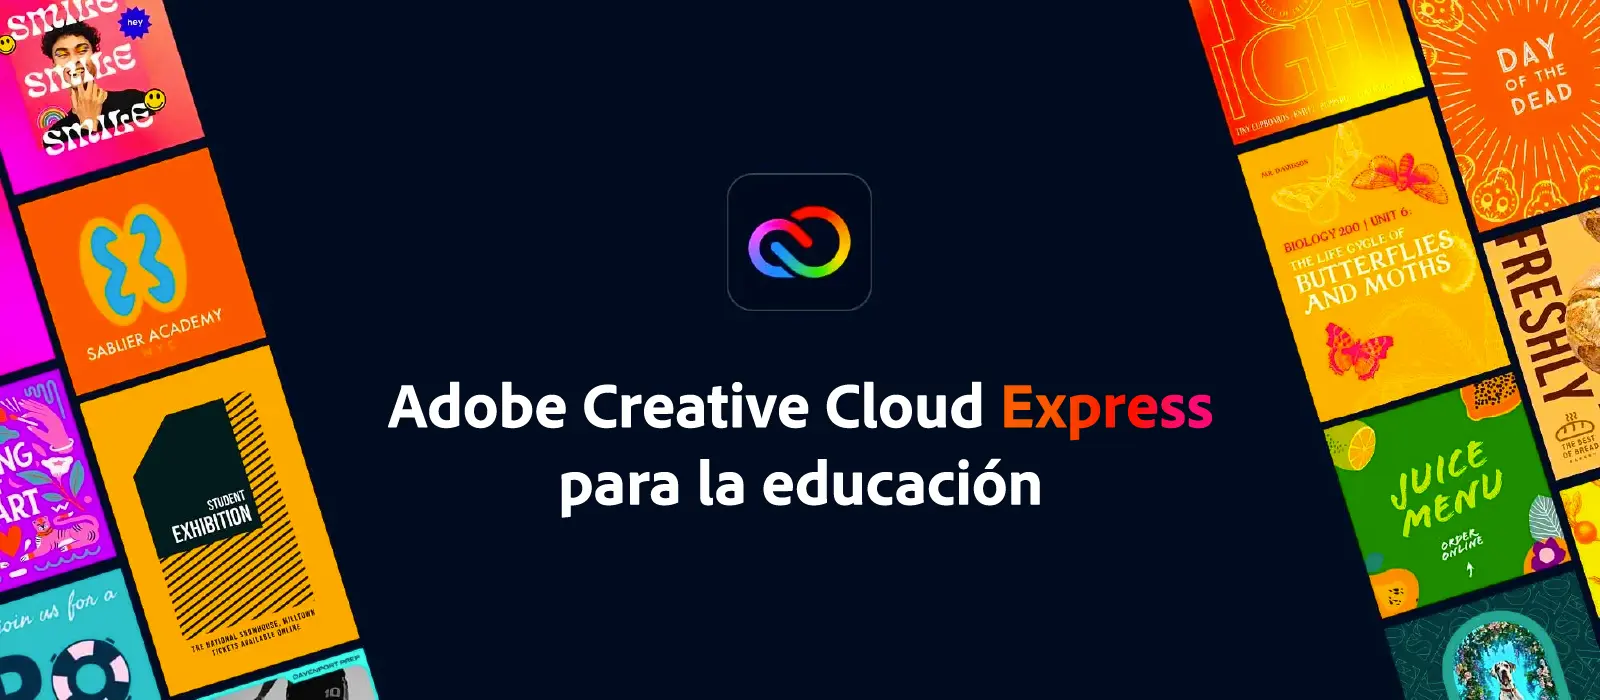 Portada con el texto Adobe Creative Cloud Express for Education